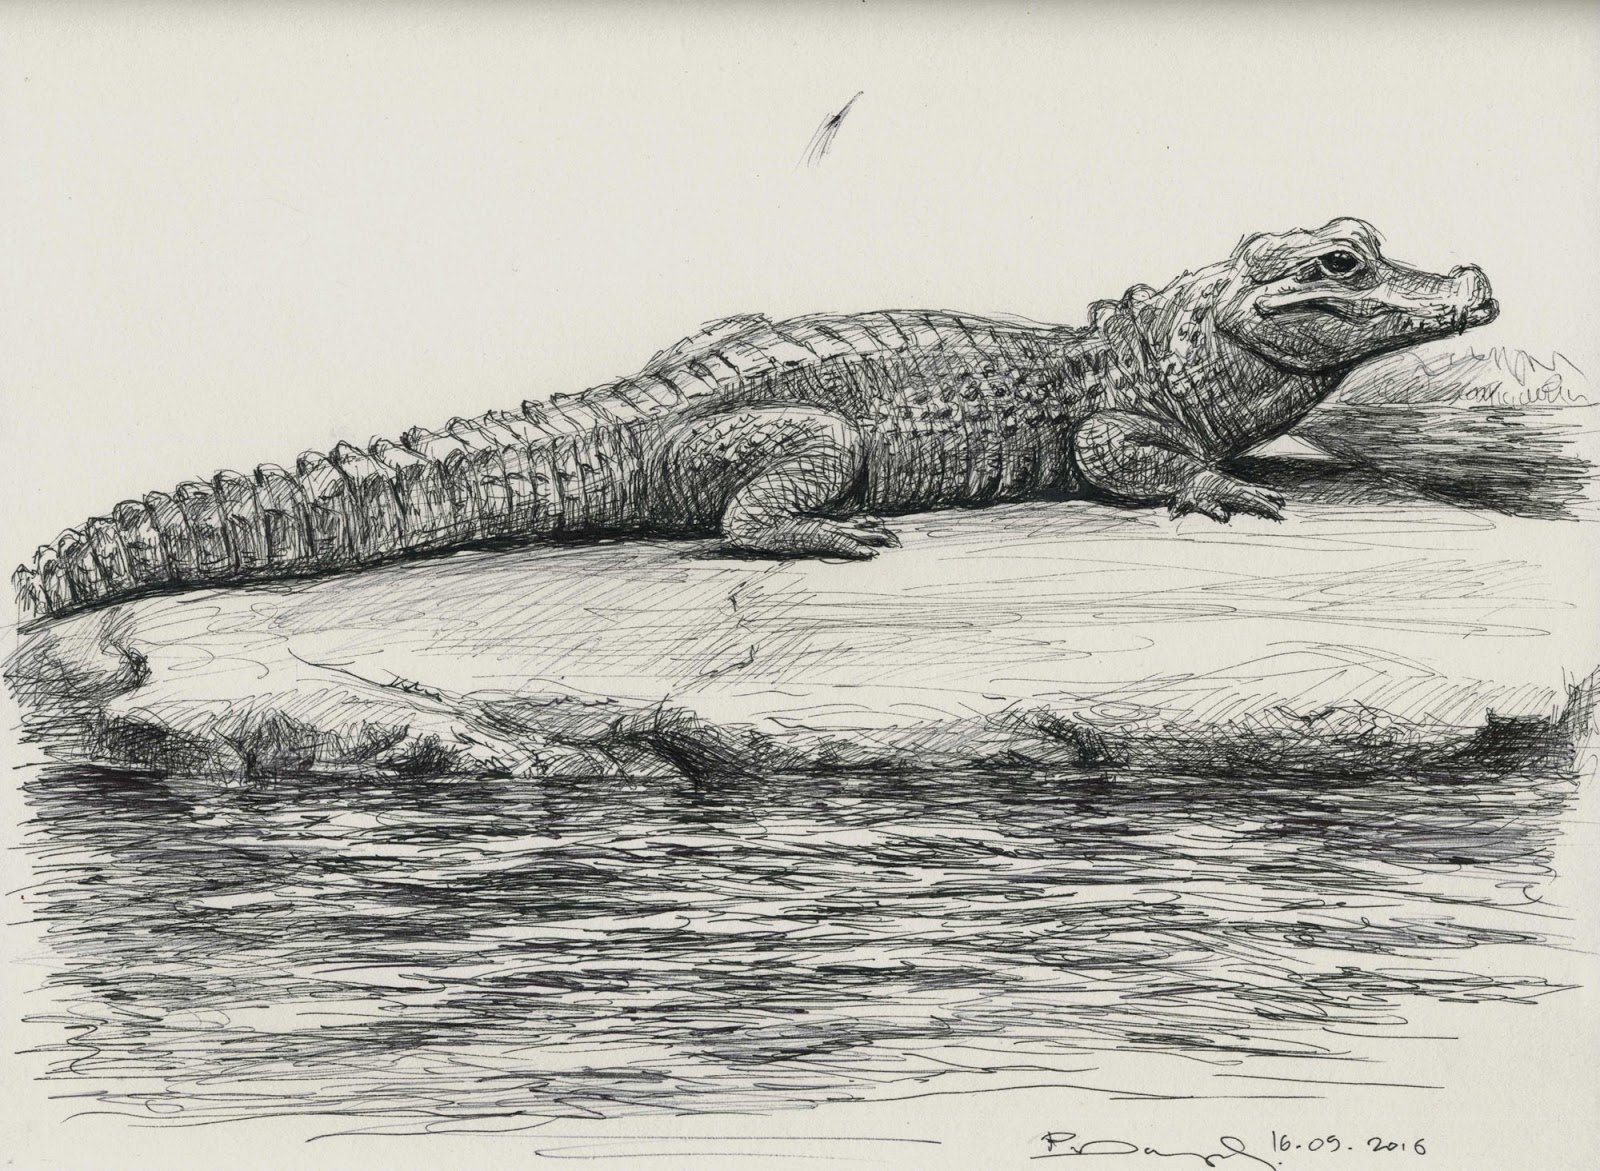 Wildlifeart-Life studies: Dwarf crocodile & Indian elephant studies